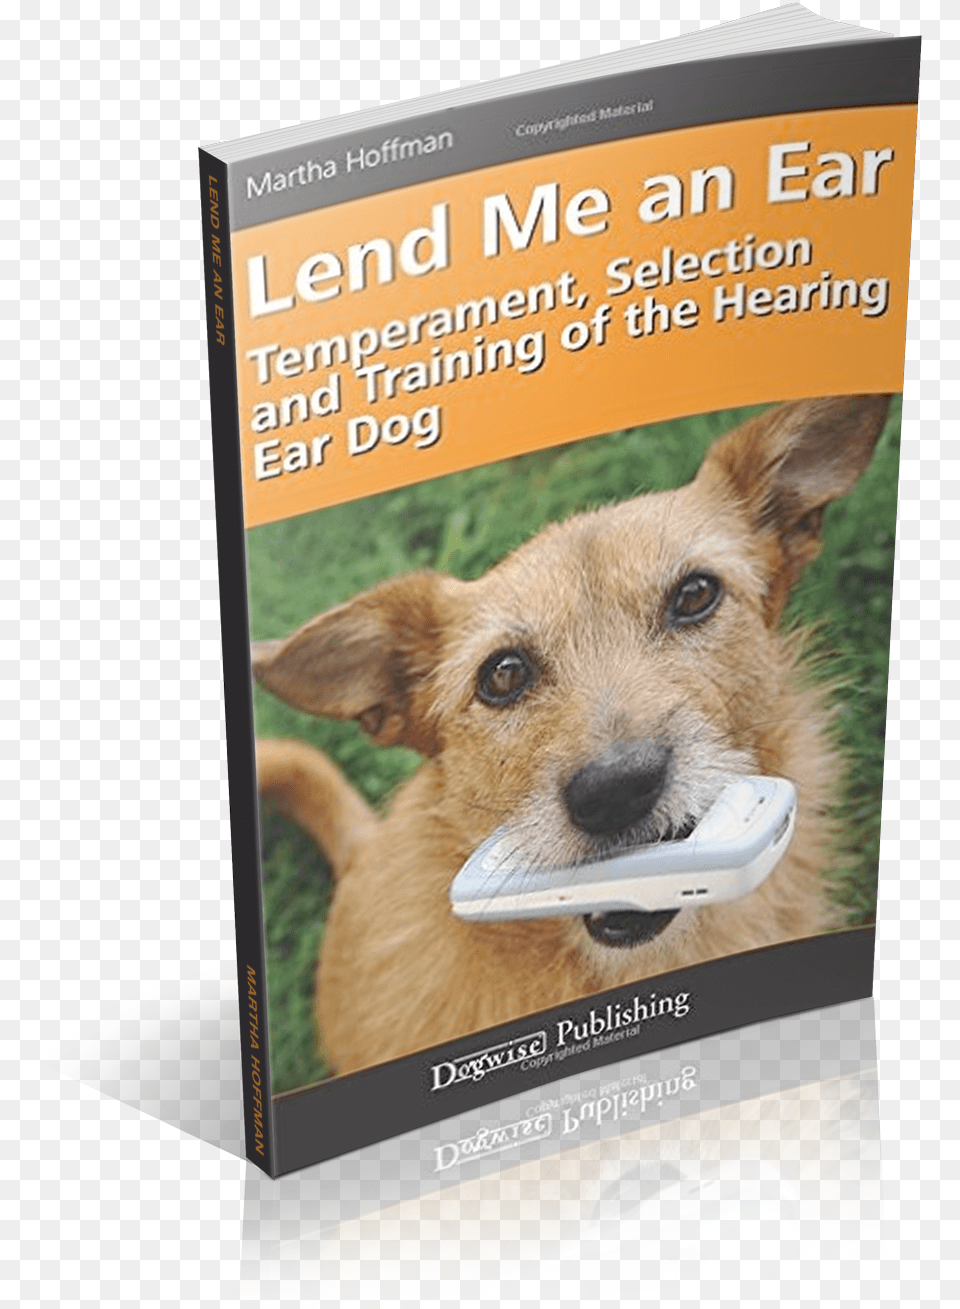 Lend Me An Ear Lend Me An Ear By Martha Hoffman, Book, Publication, Mammal, Animal Png Image